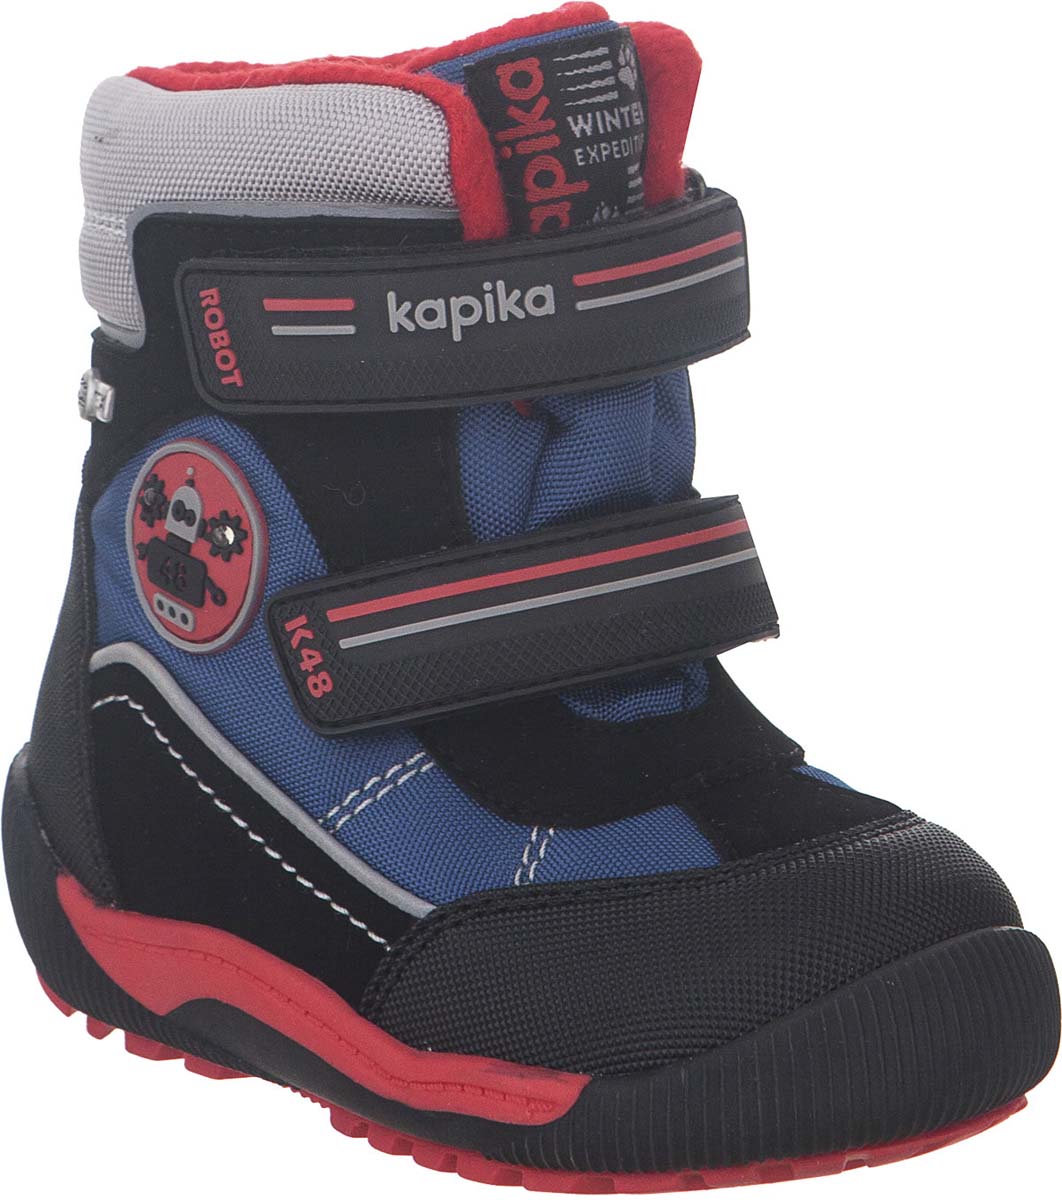 Ботинки для мальчика Kapika KapiTEX, цвет: синий, черный. 41206-1. Размер 24